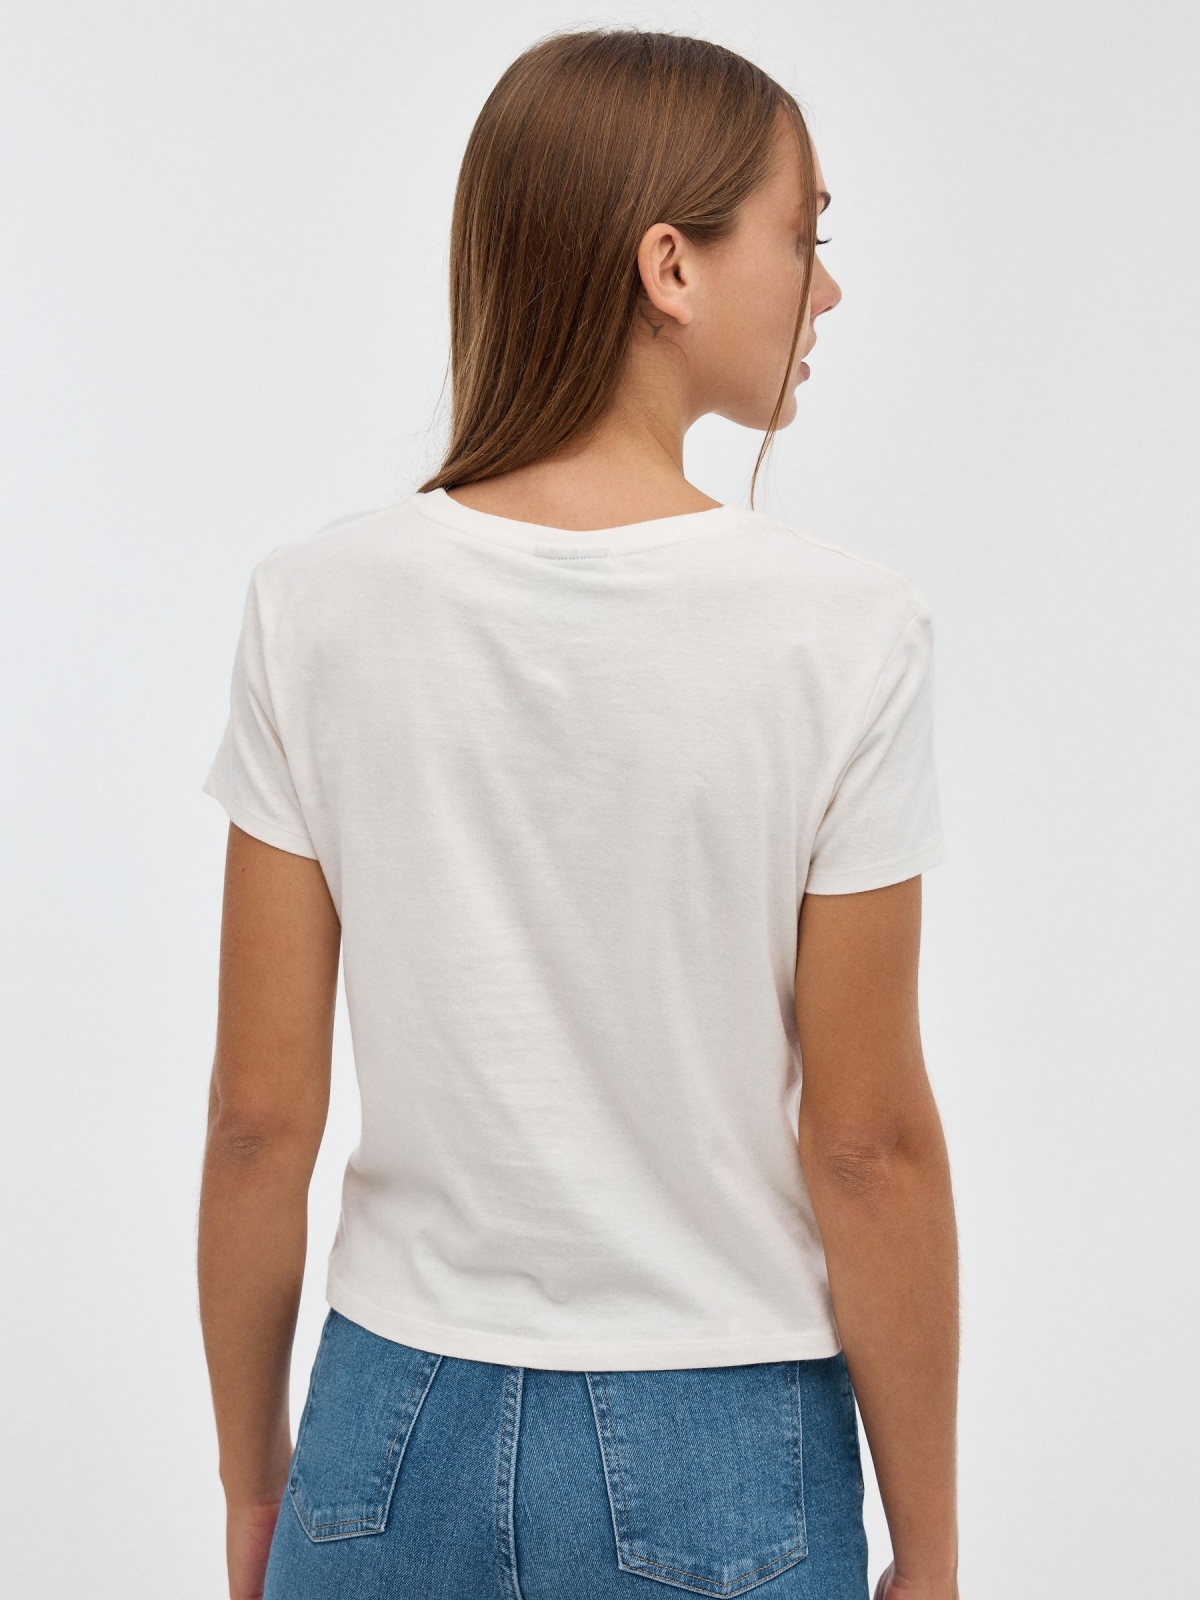 T-shirt da Hatsune Miku off white vista meia traseira